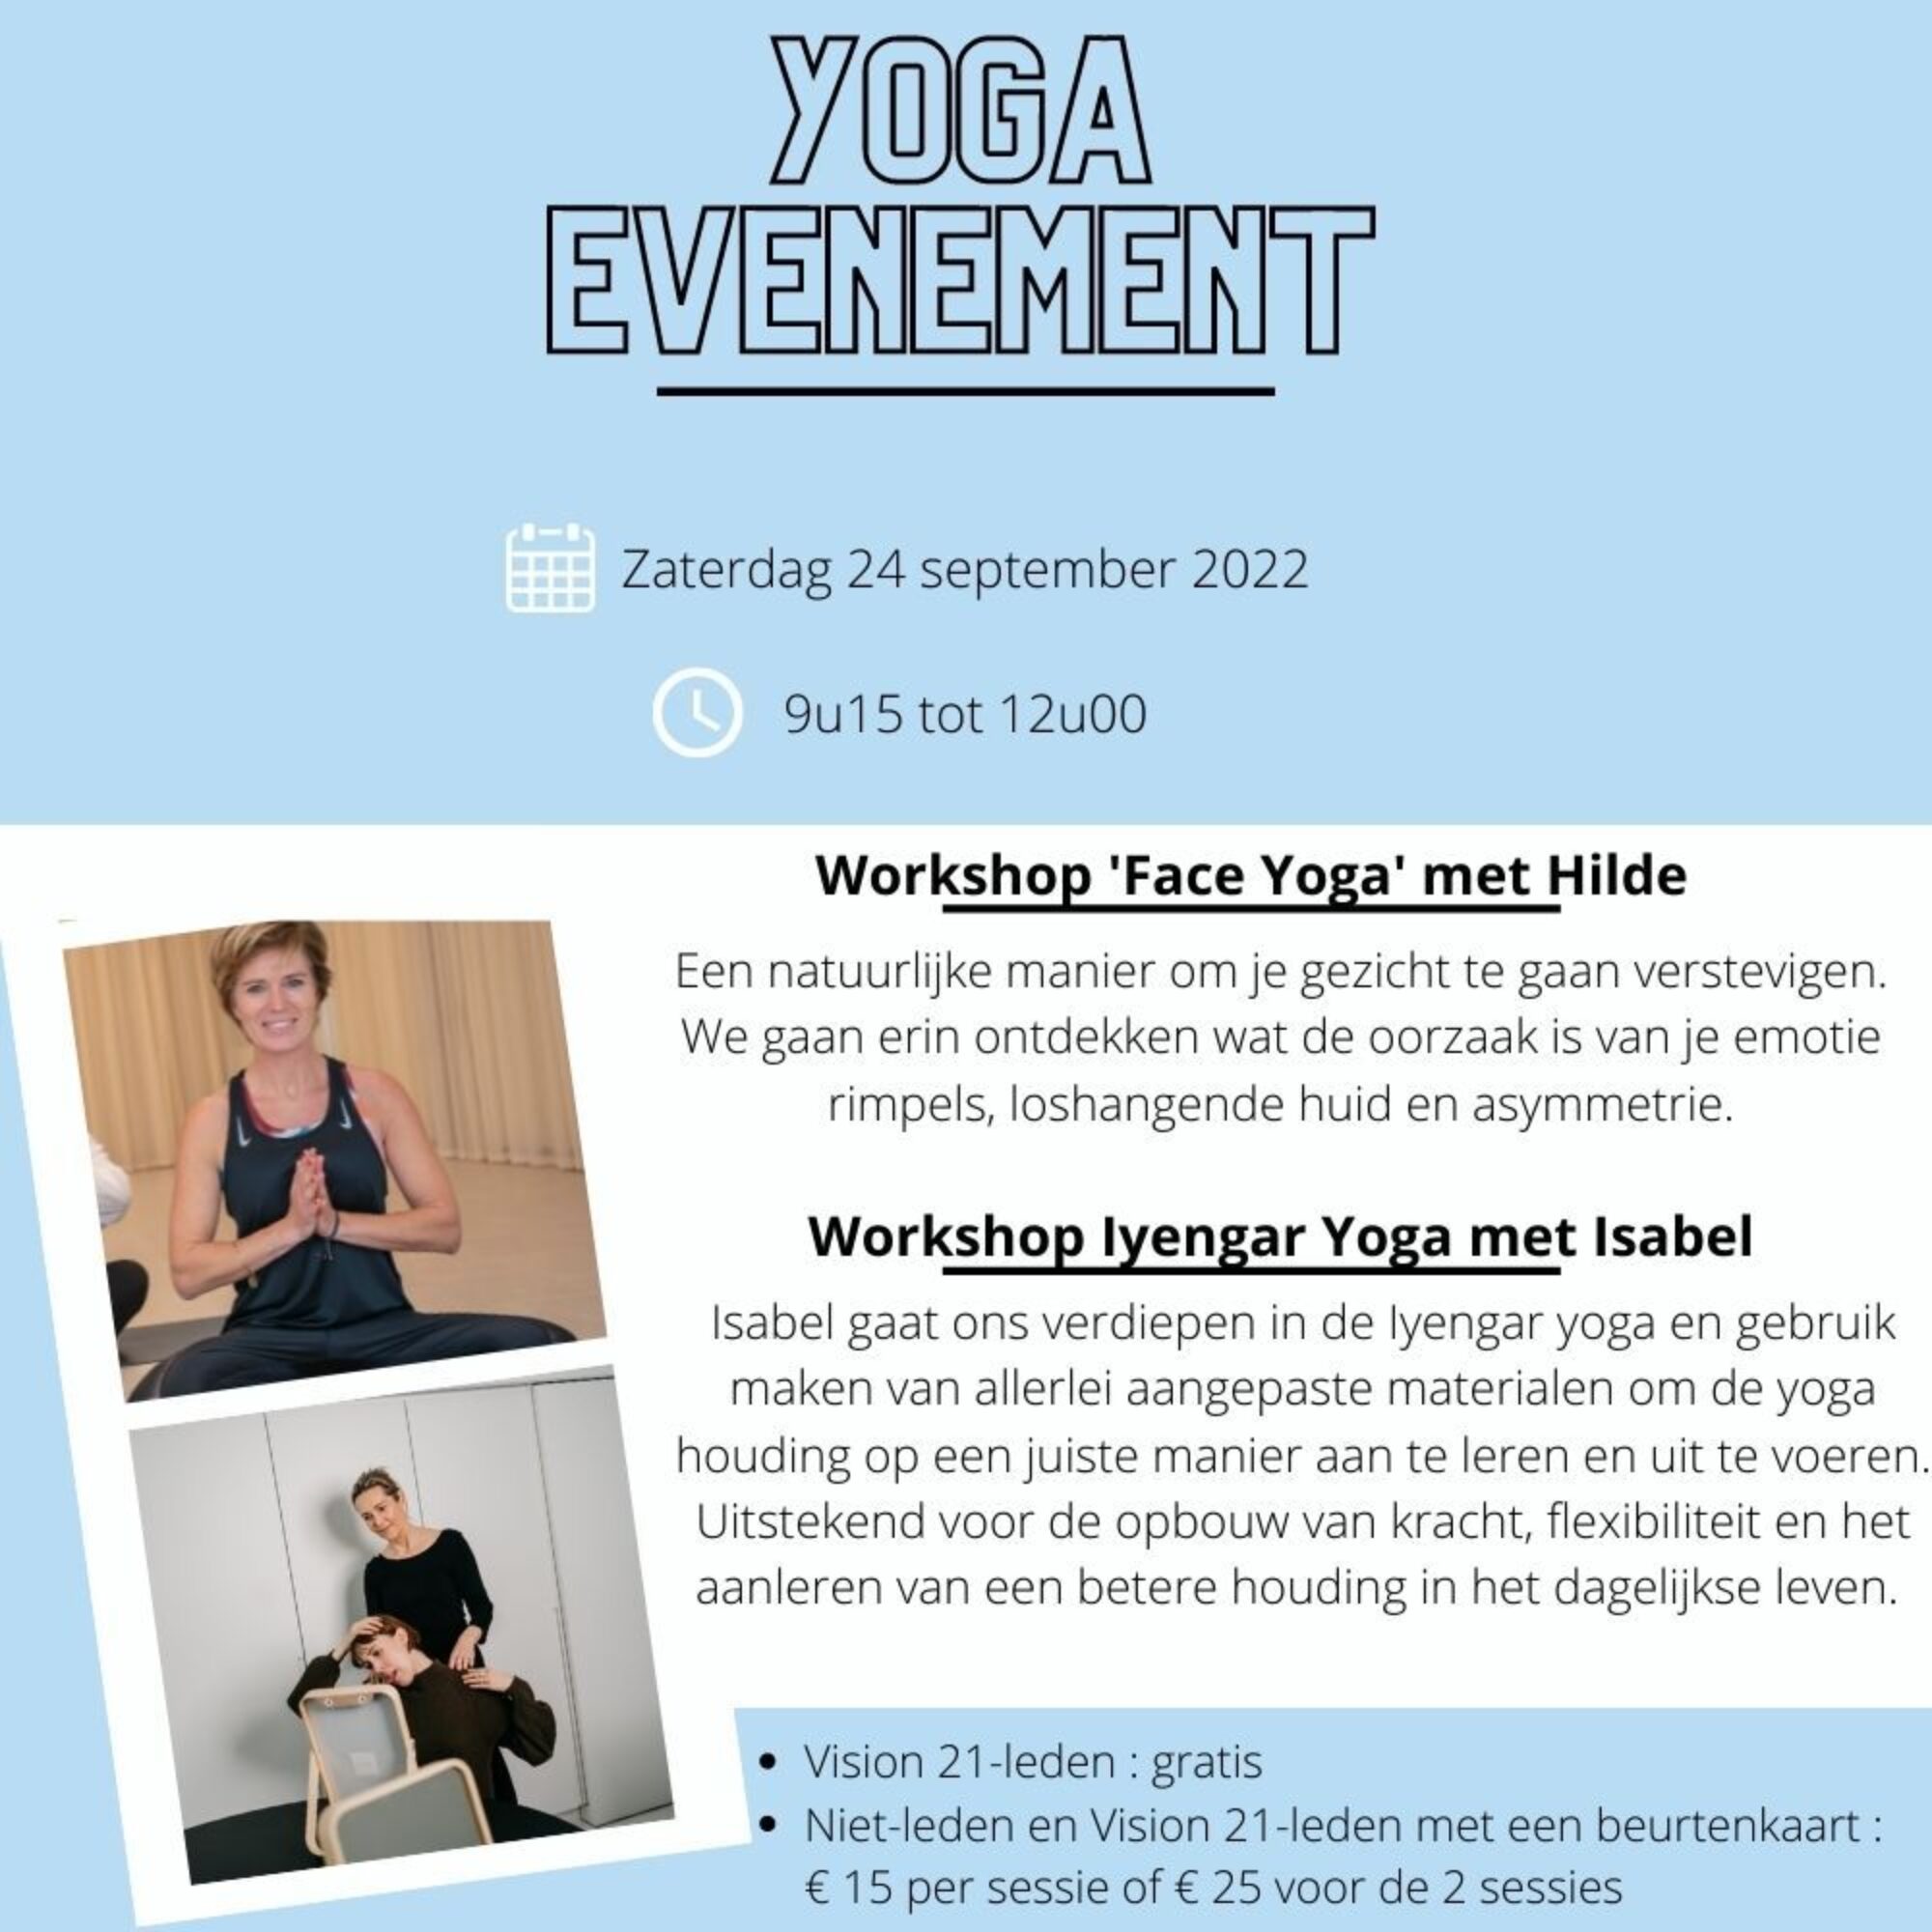 Yogaworkshop voordracht face yoga en workshop Iyengar Yoga 1000 x 1000 px